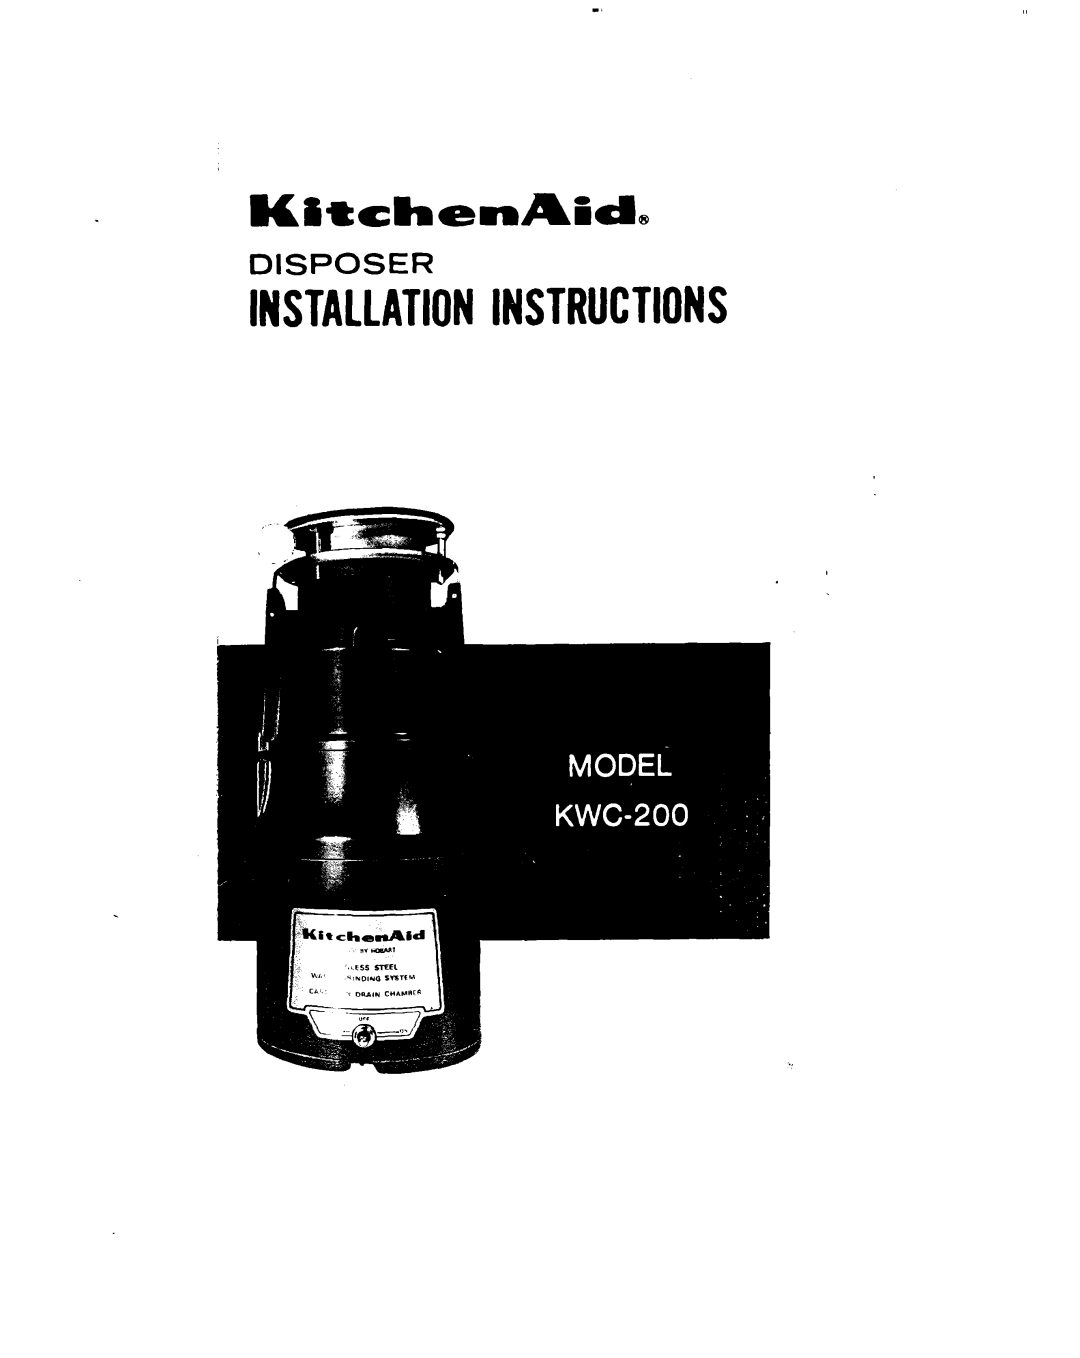 KitchenAid KWC-200 installation instructions Installationinstructions, Disposer 